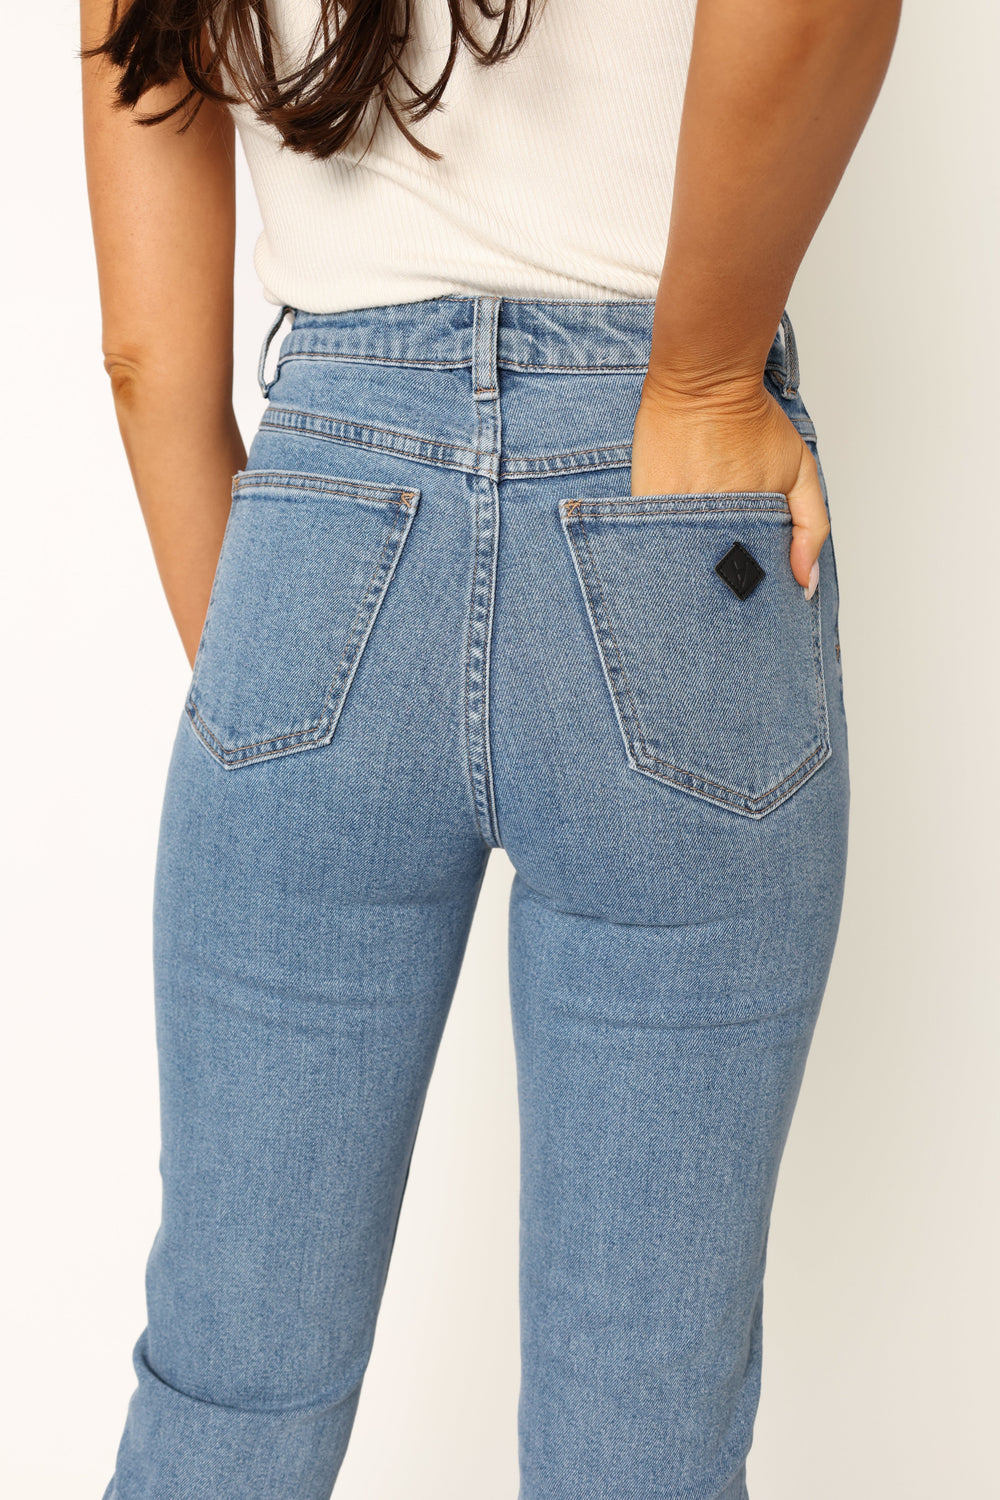 BOTTOMS @Abrand 94 High Slim Jeans - Georgia